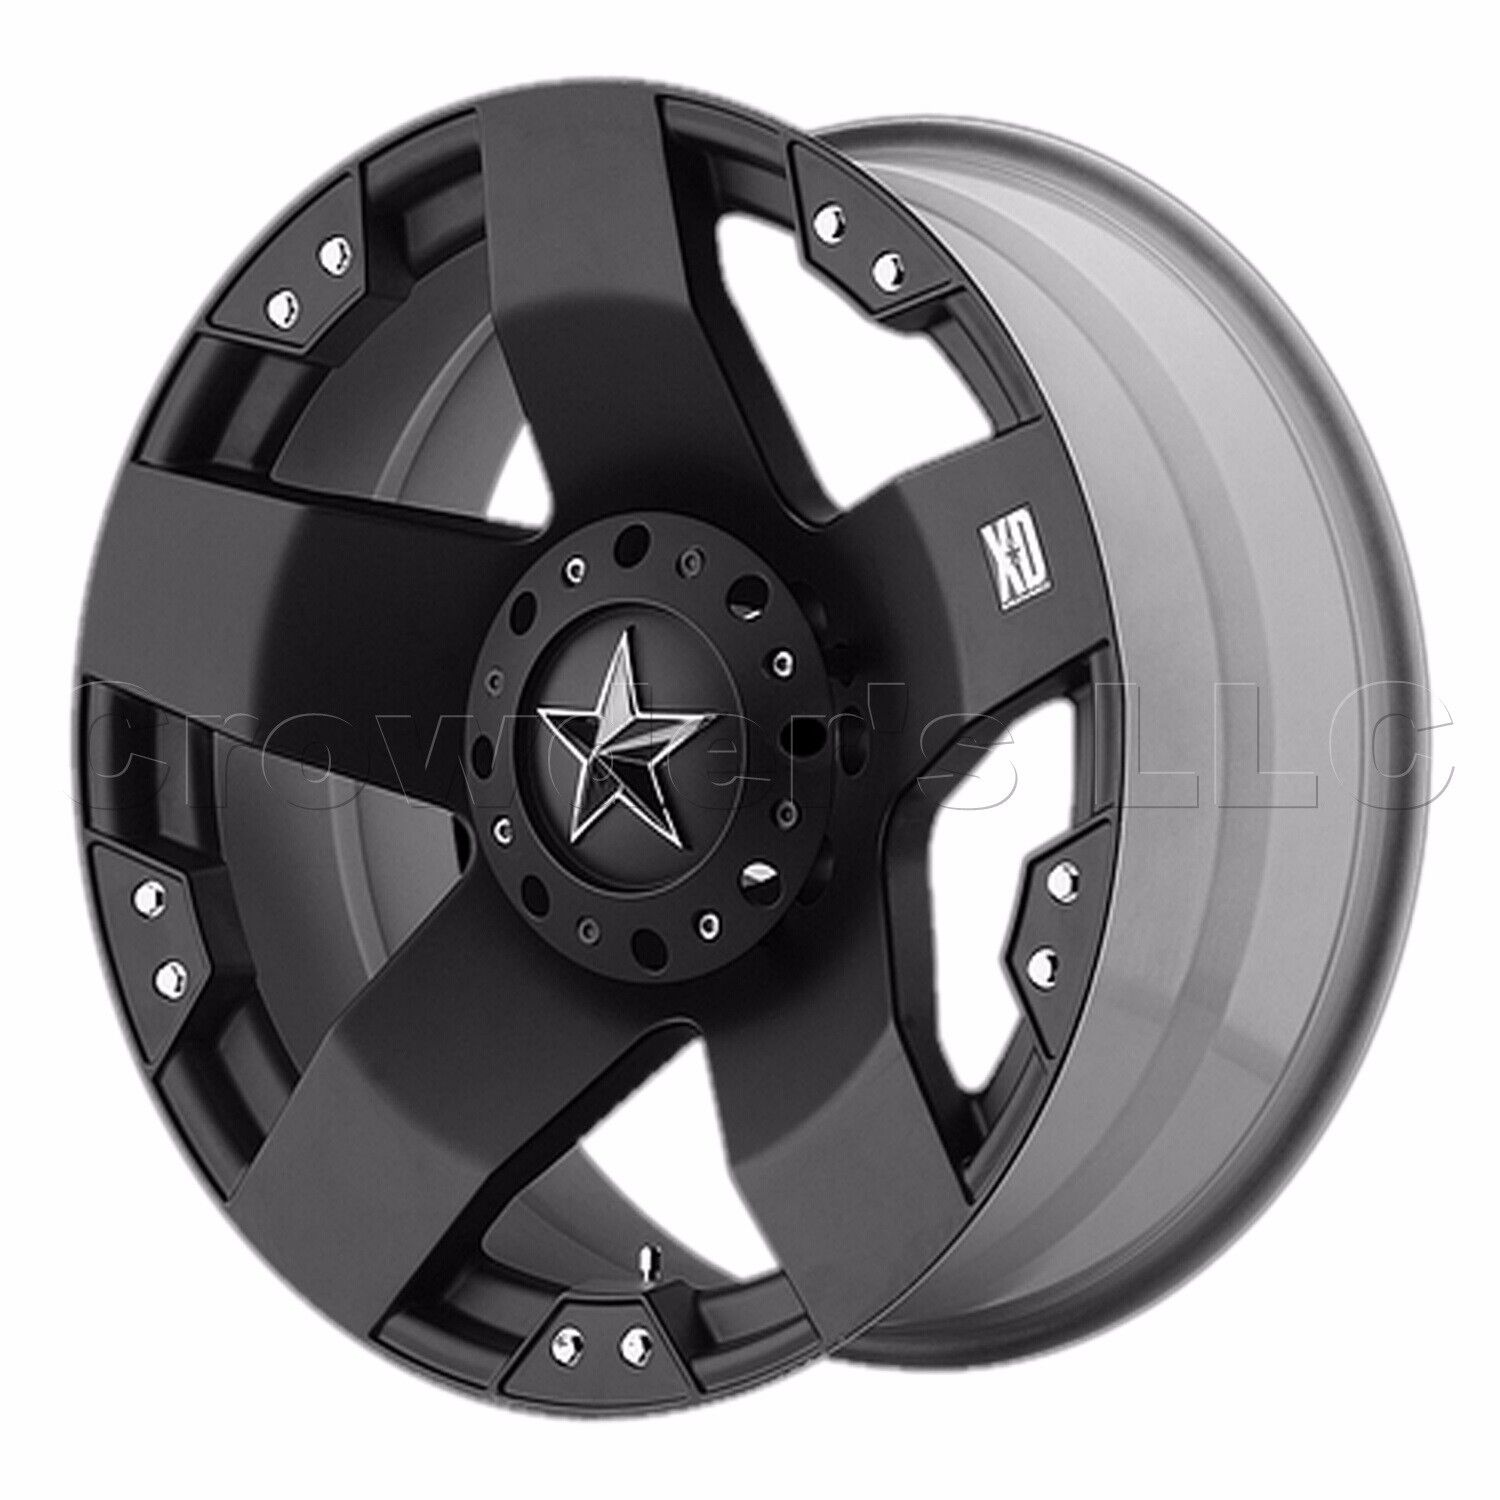 KMC XD SERIES 18 x 9 Rockstar Wheel Rim 5x114.3 5x120.7 Part # XD77589004300